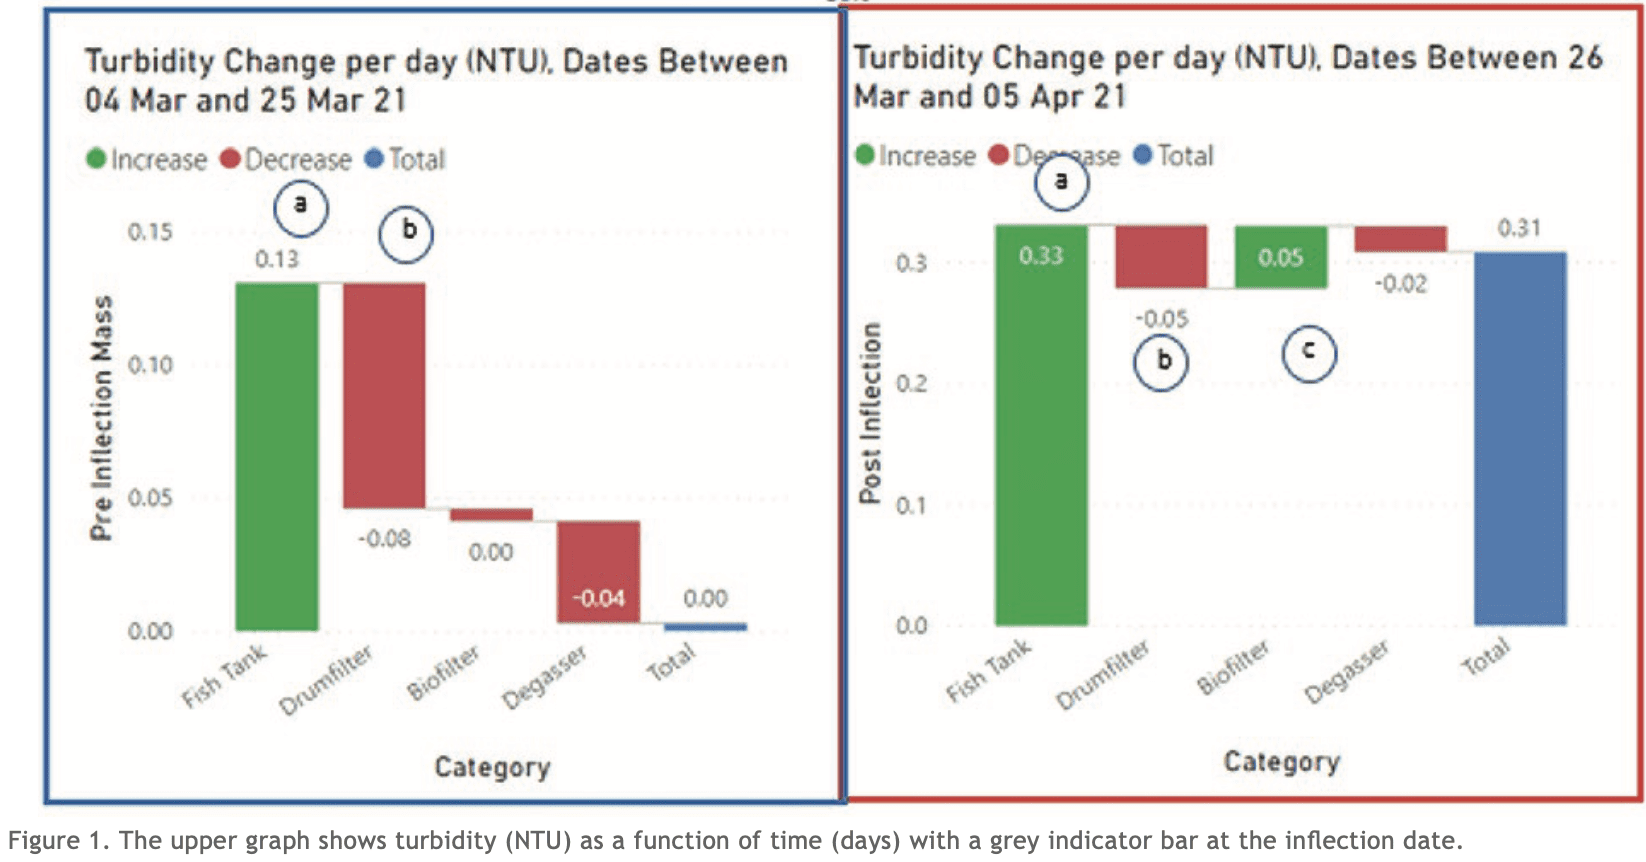 Turbidity changes per day